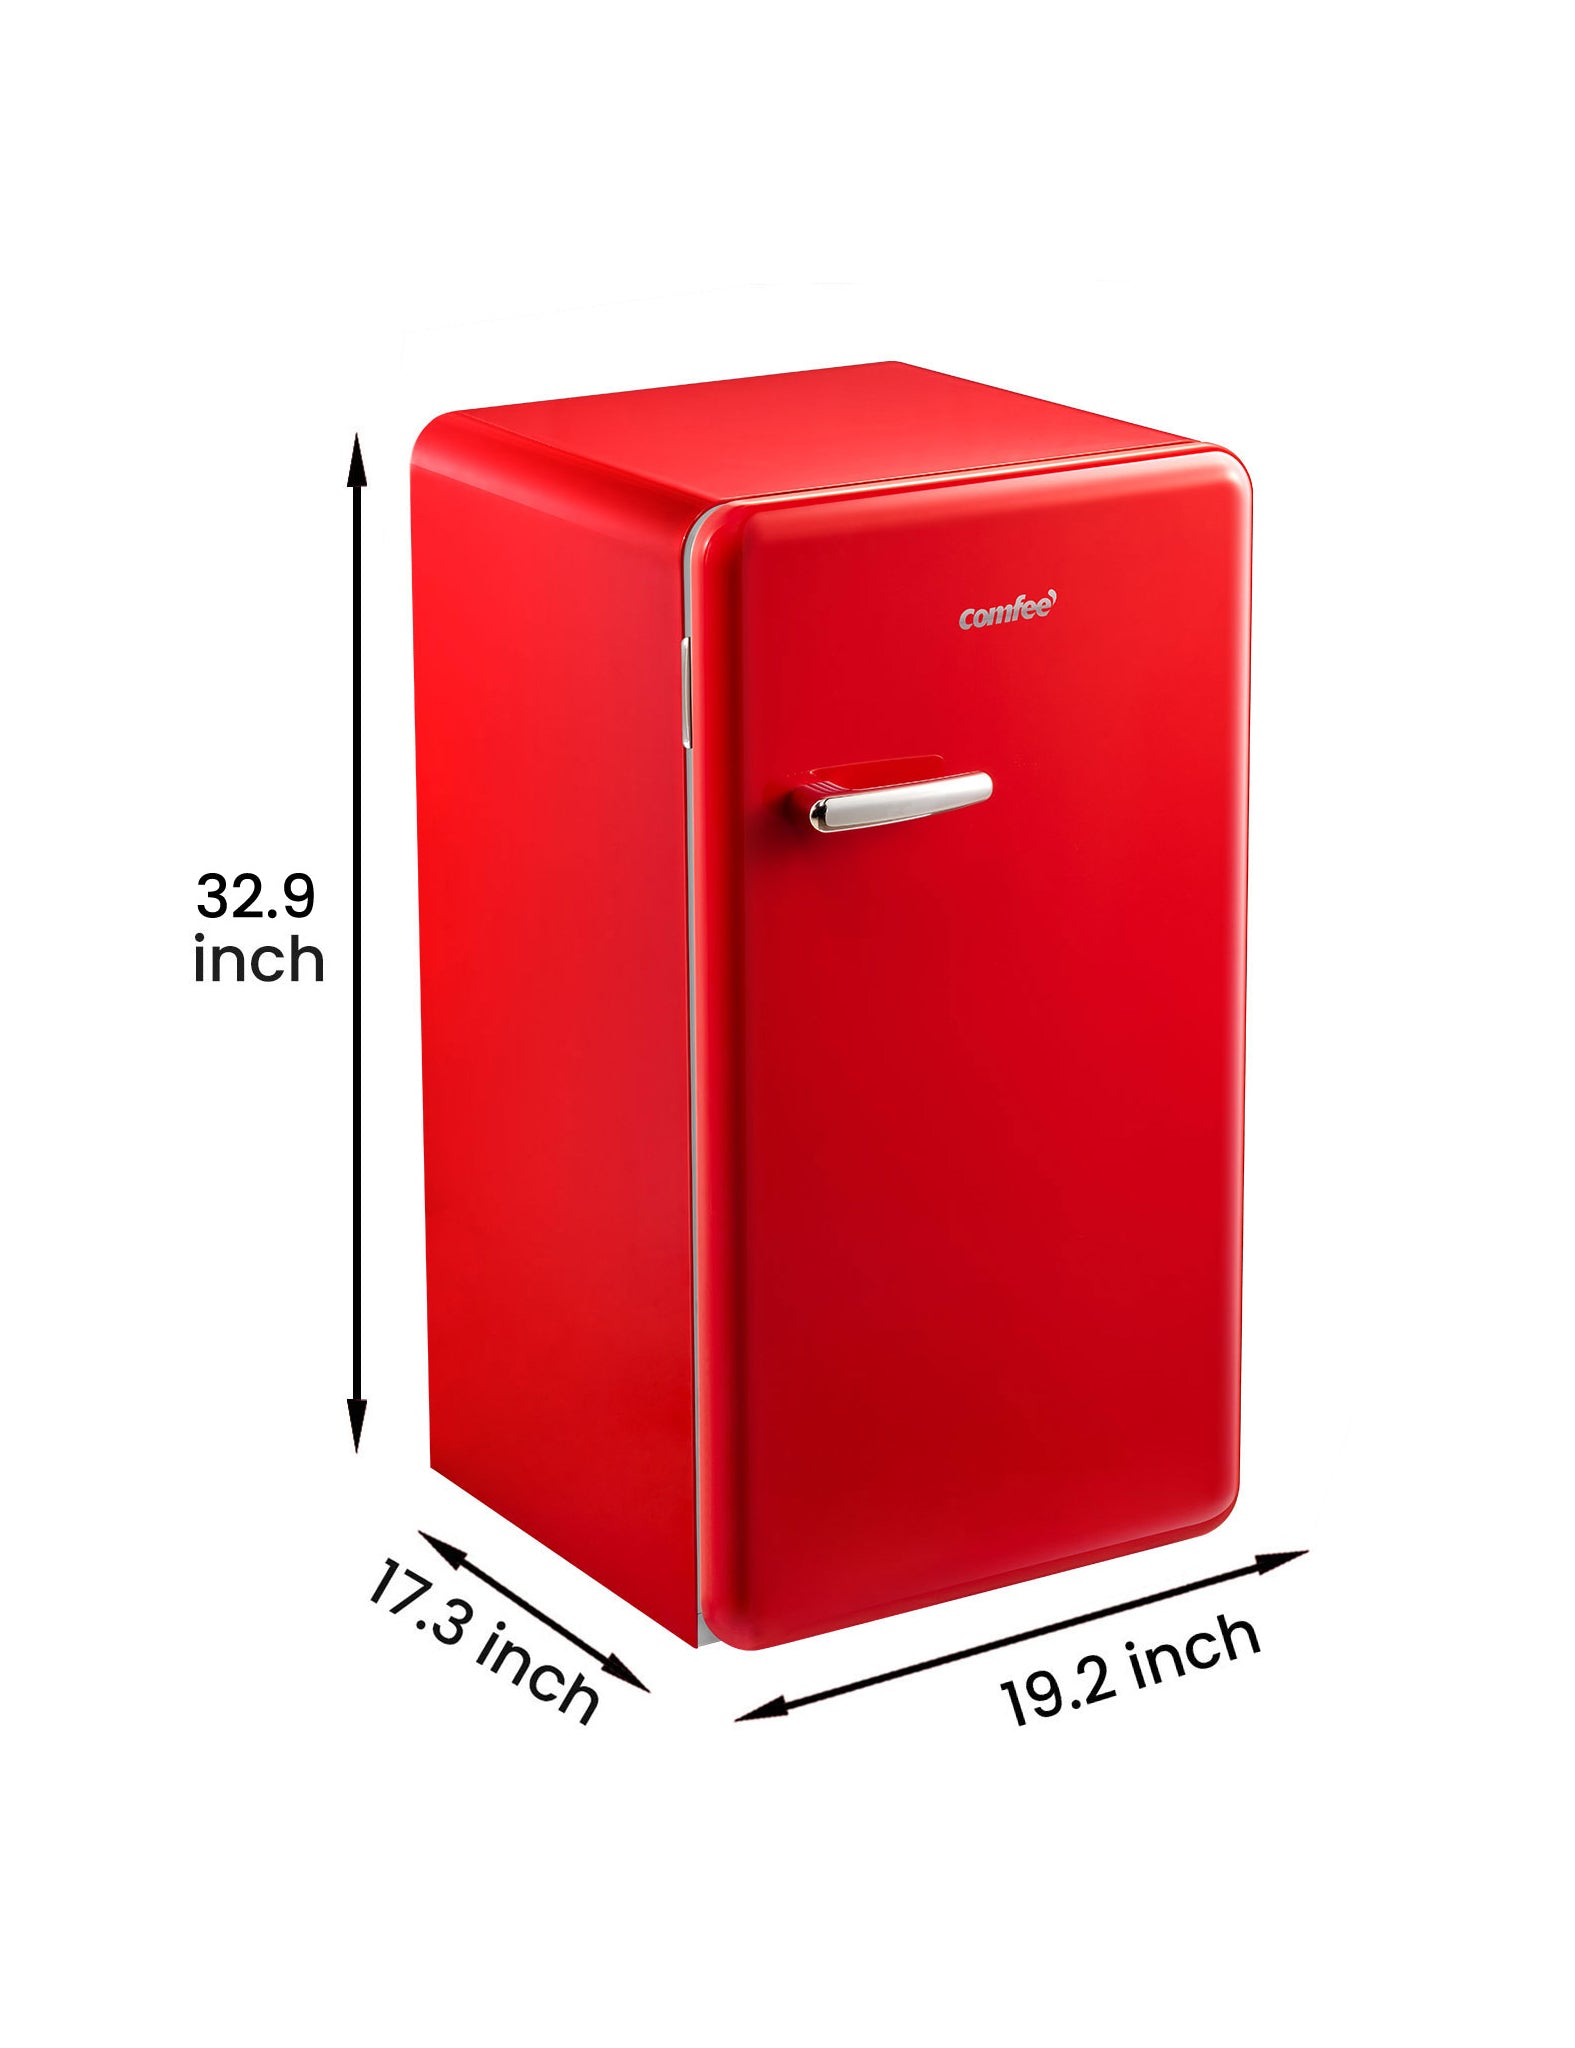 size dimensions of red comfee retro refrigerator